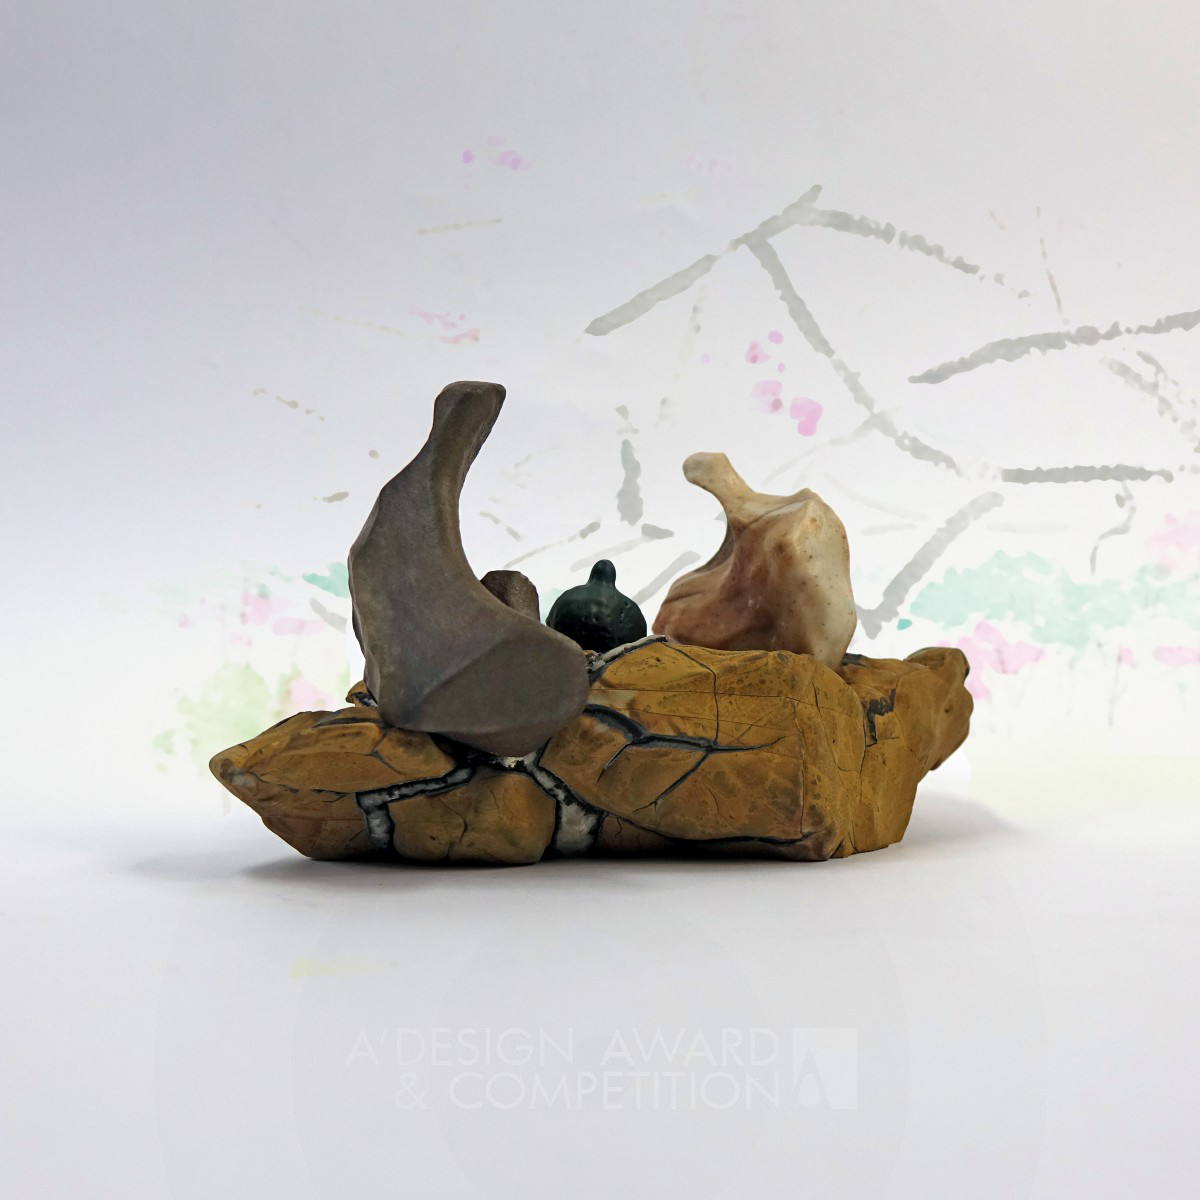 Conversations Stone Scenes by Naai-Jung Shih Iron Fine Arts and Art Installation Design Award Winner 2018 